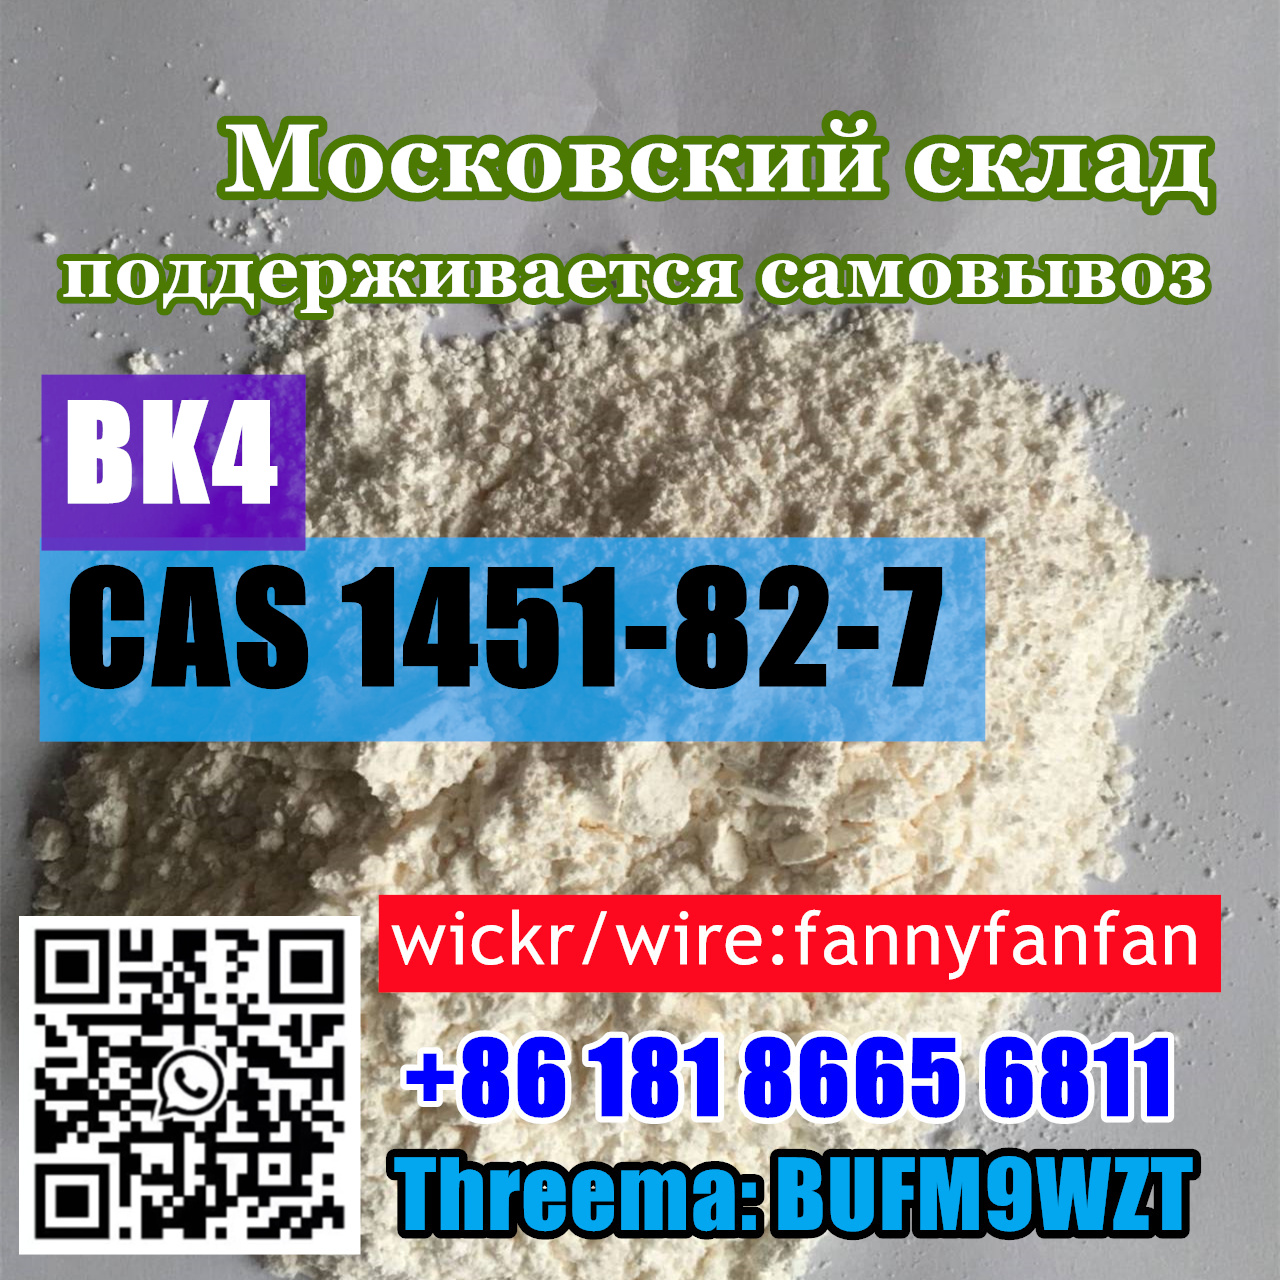 Wickr/Wire:fannyfanfan BK4 Bromketon-4 2-bromo-4-methyl-propiophenone CAS 1451-82-7 в городе Москва, фото 3, стоимость: 1 руб.